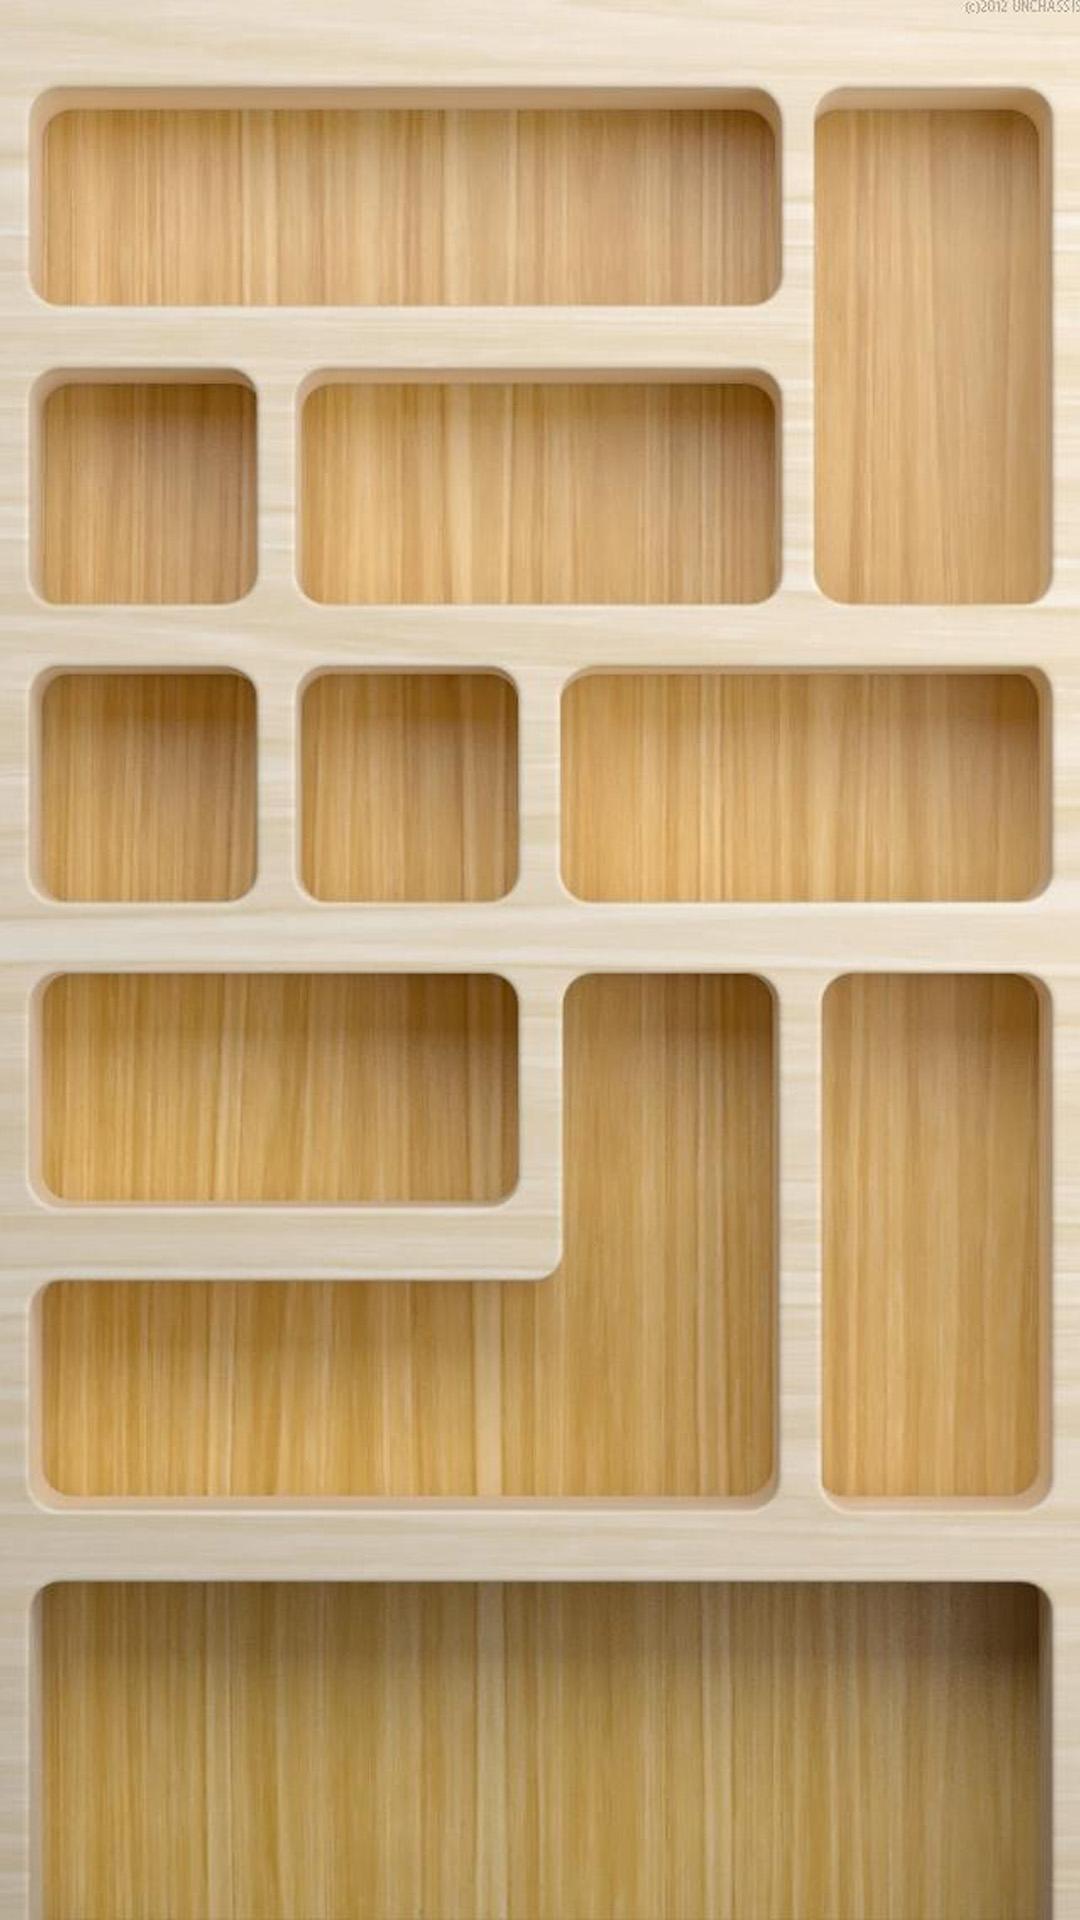 IPhone 6 Shelf Wallpapers